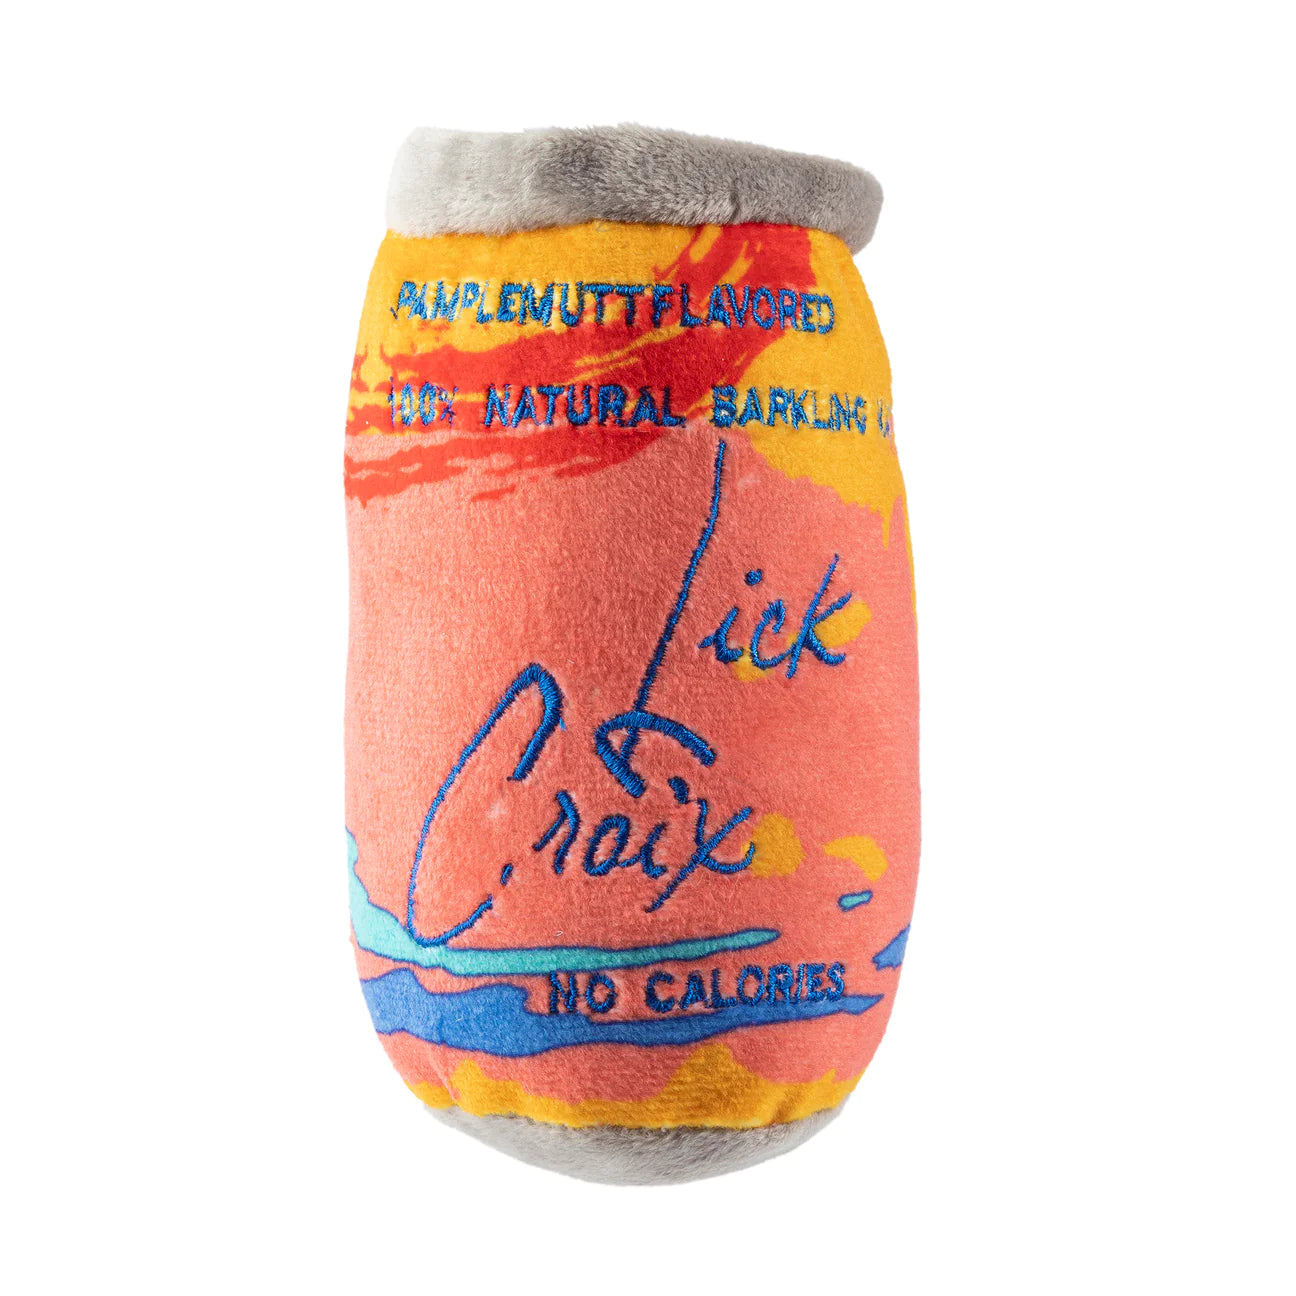 LickCroix Barkling Water - Pamplemutt Flavored